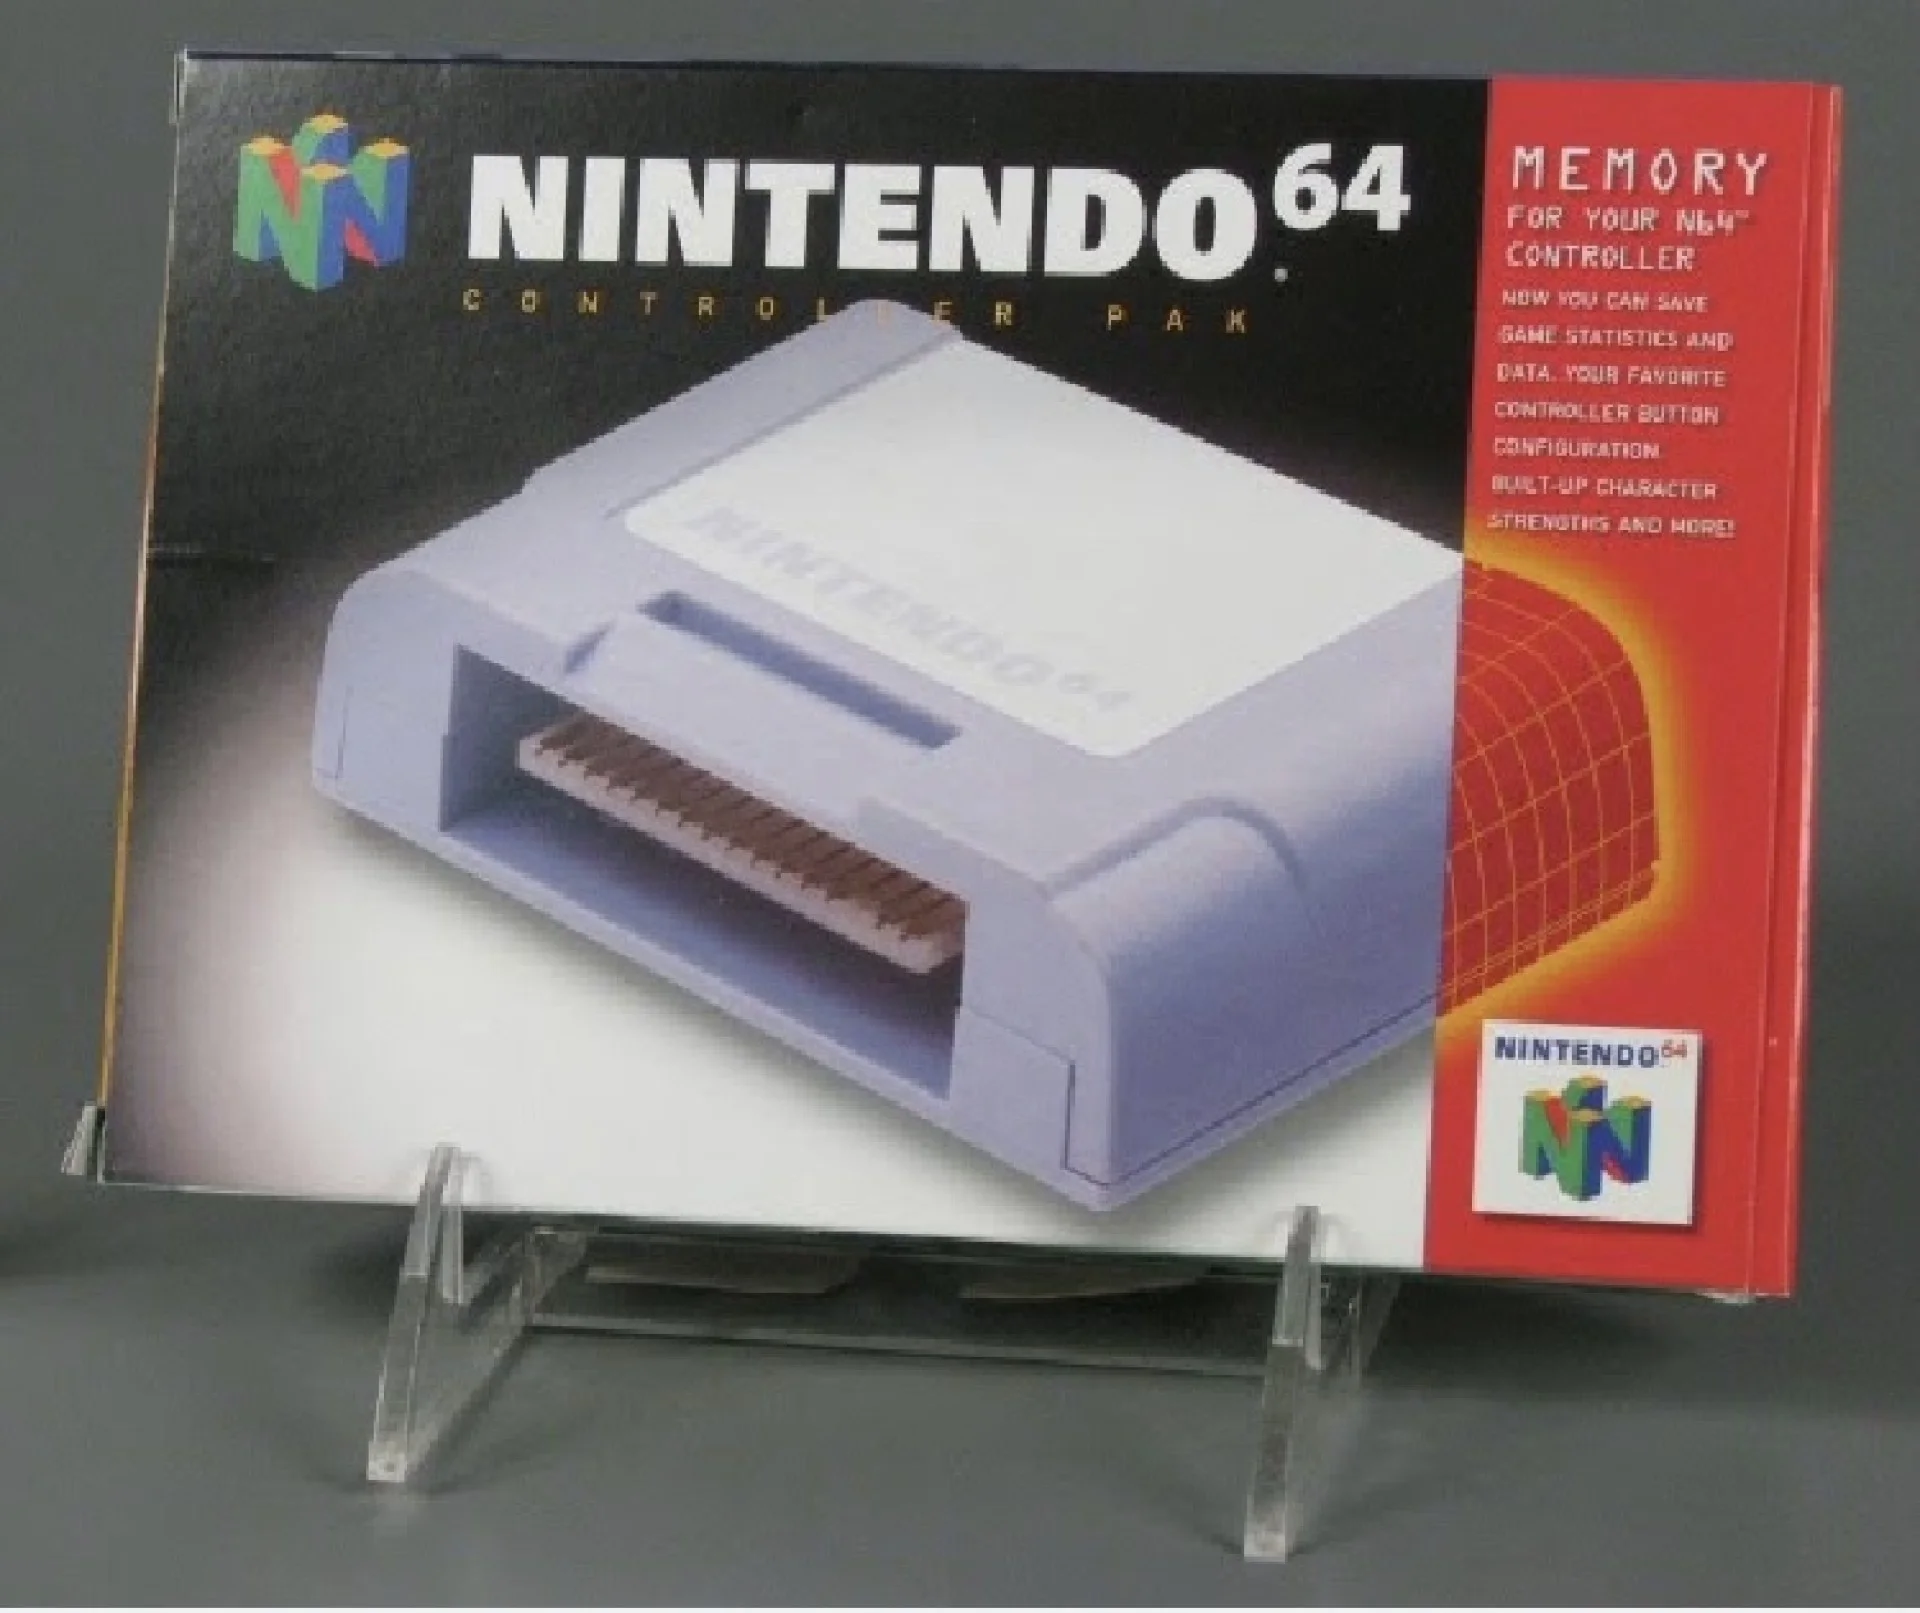  Nintendo 64 Controller Pak [AUS]